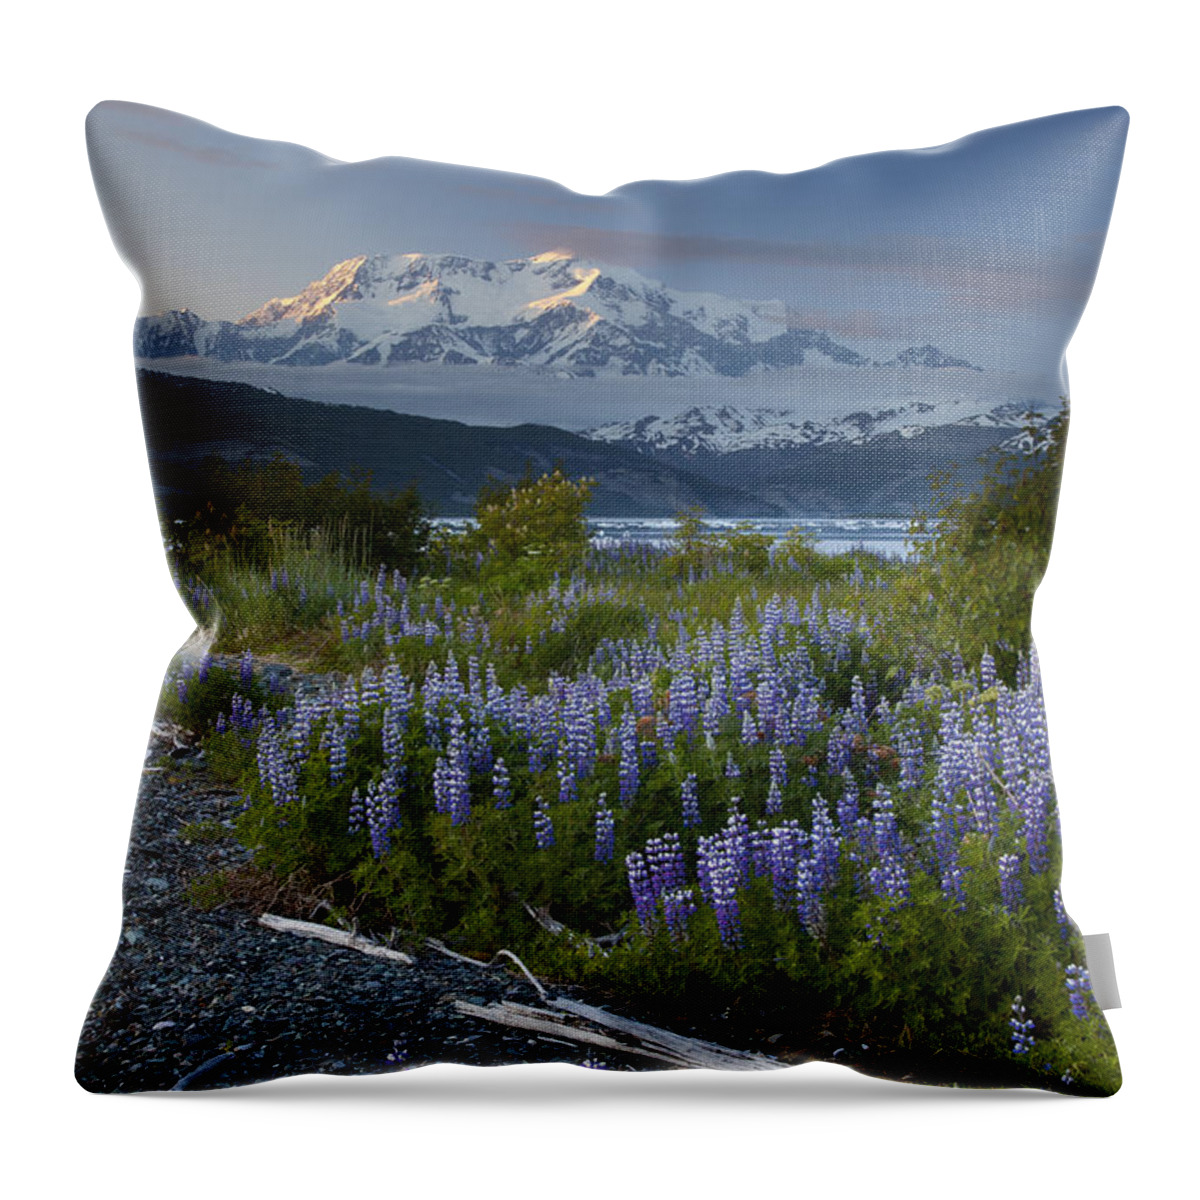 00477994 Throw Pillow featuring the photograph Lupine And Mount Elias by Matthias Breiter